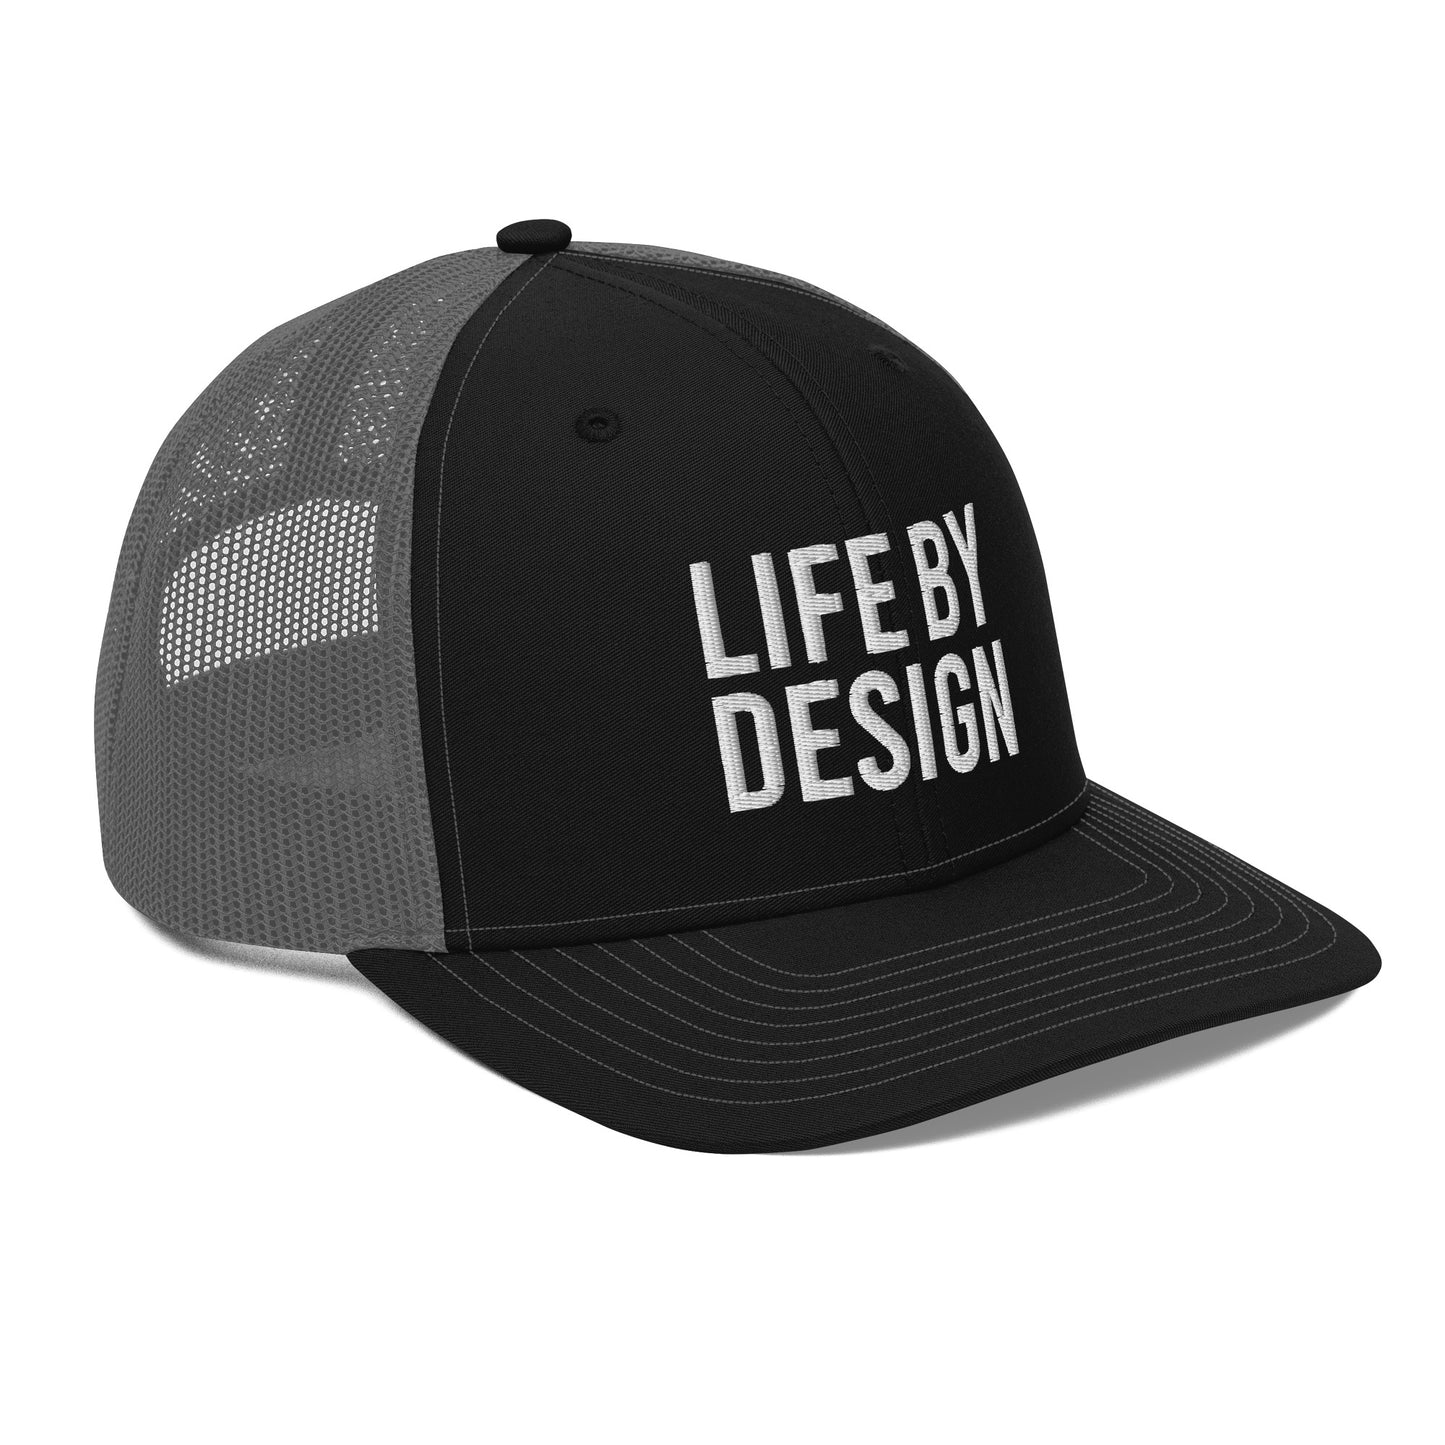 Life By Design Trucker Cap